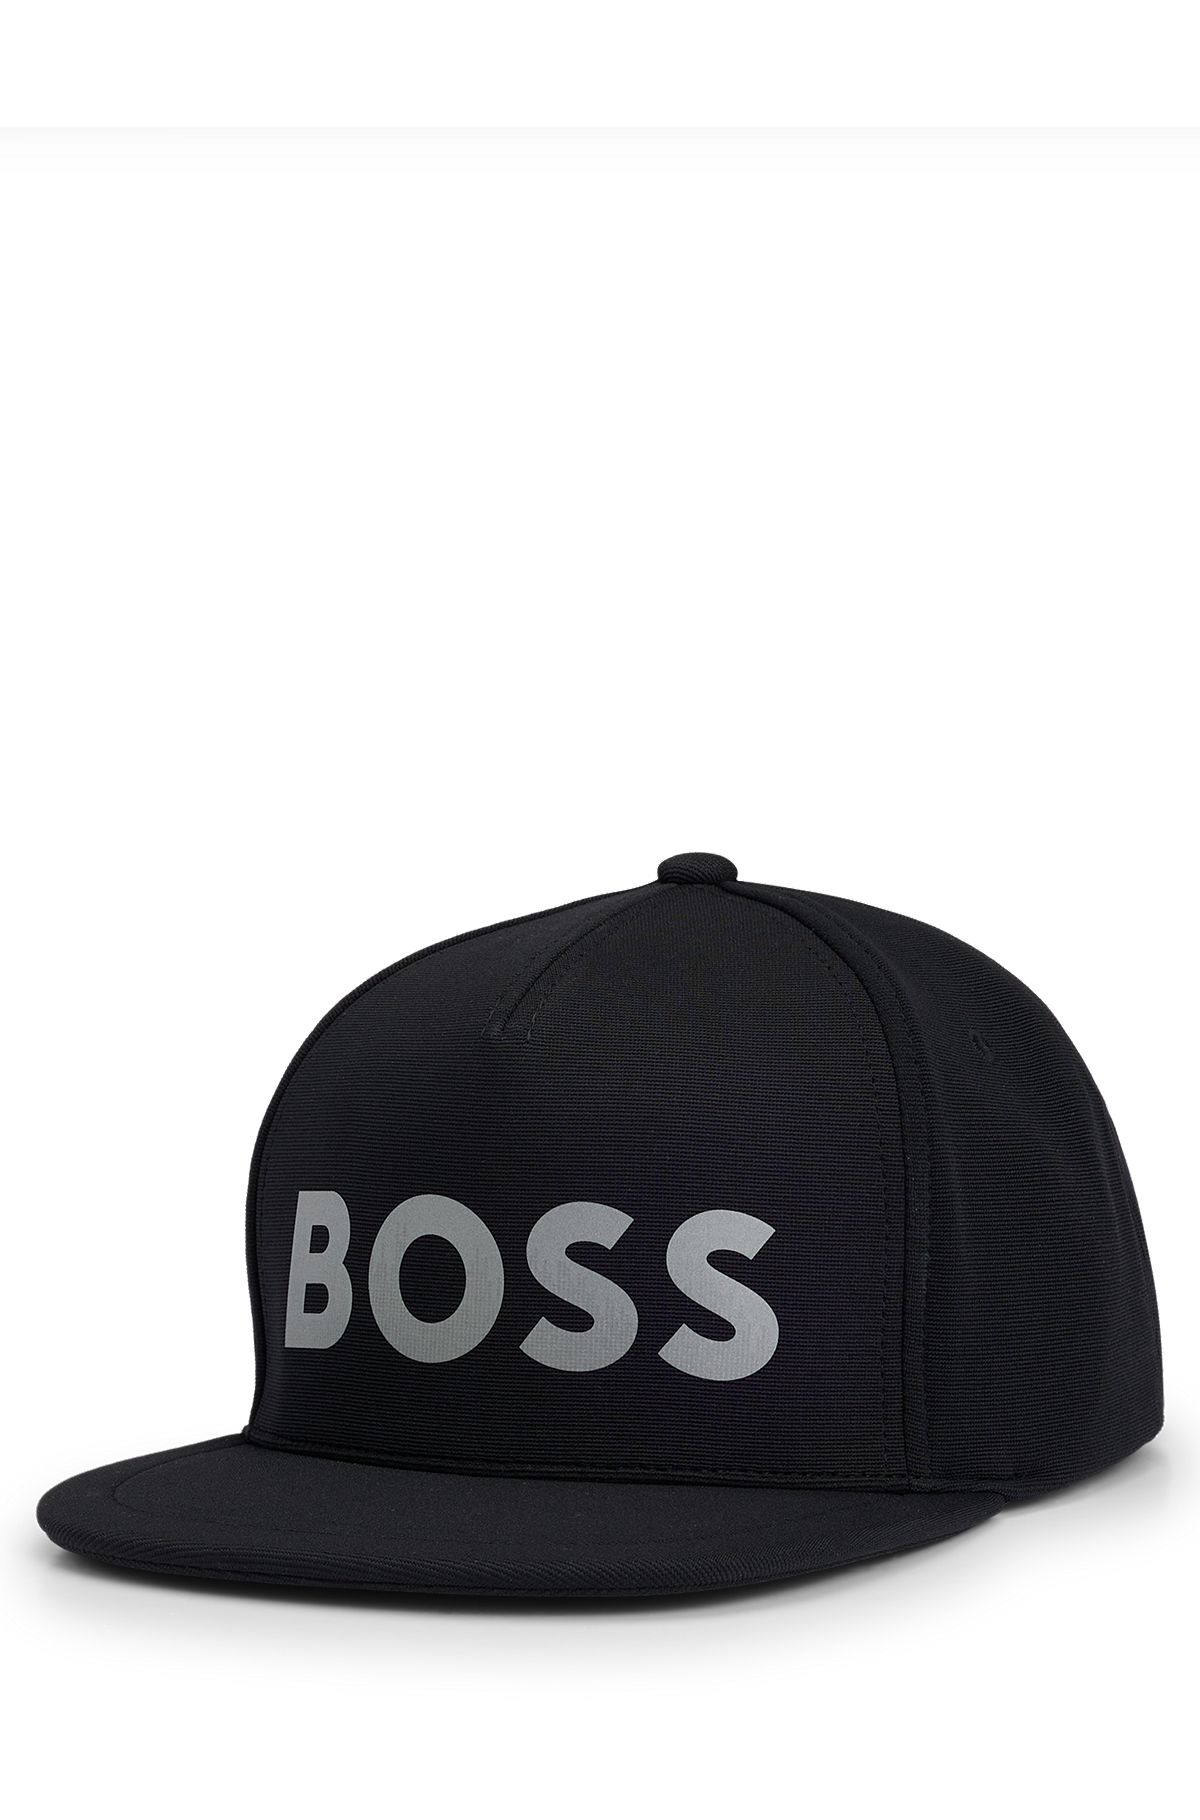 Caps & Beanies in Black by HUGO BOSS | Men